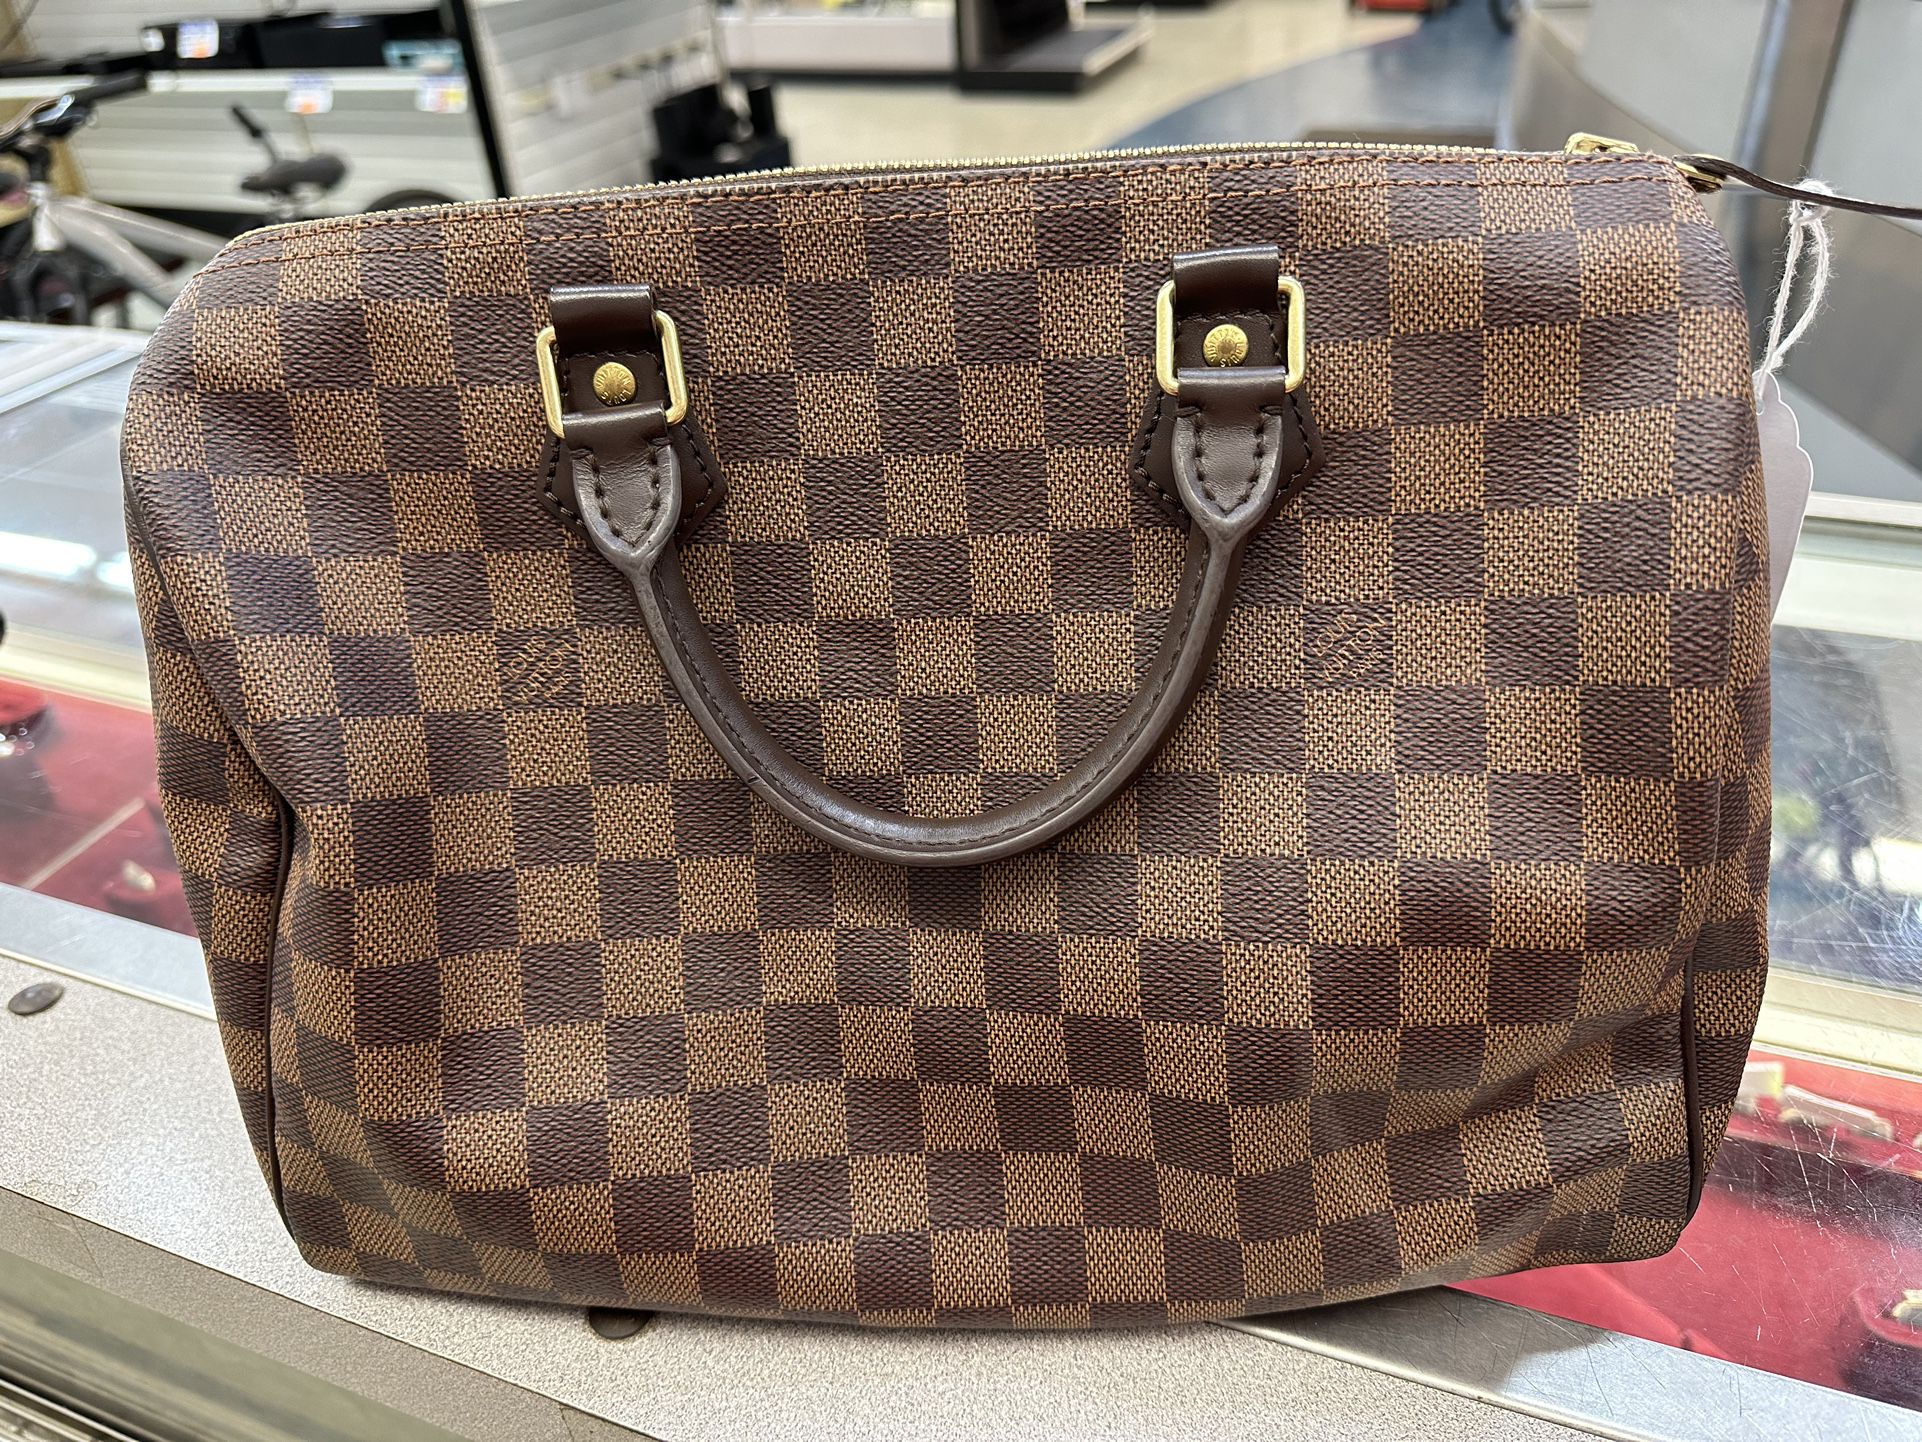 Authentic Louis Vuitton Monogram Juliet MM Bag for Sale in Houston, TX -  OfferUp